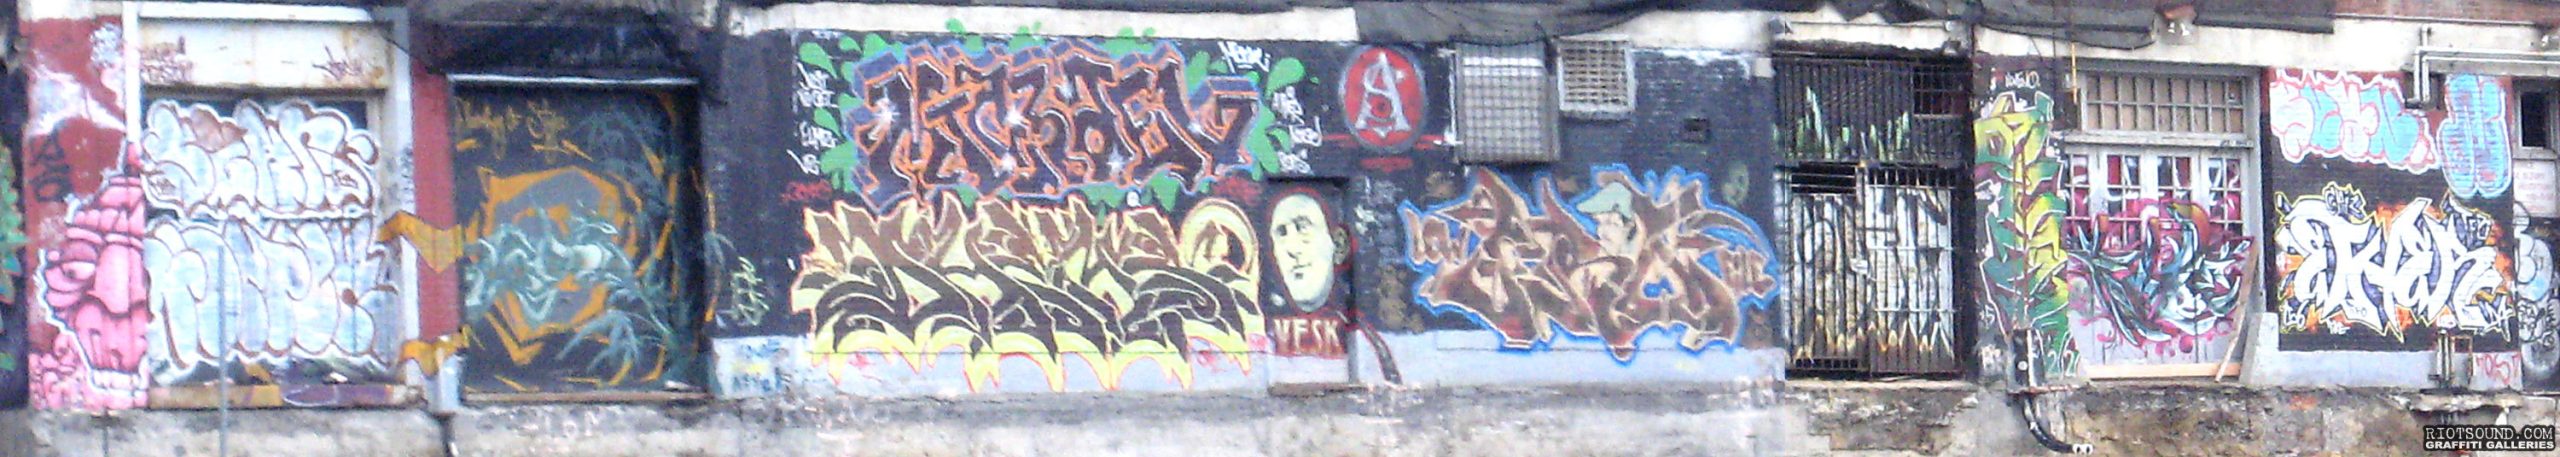 Graffiti Art Legal Wall